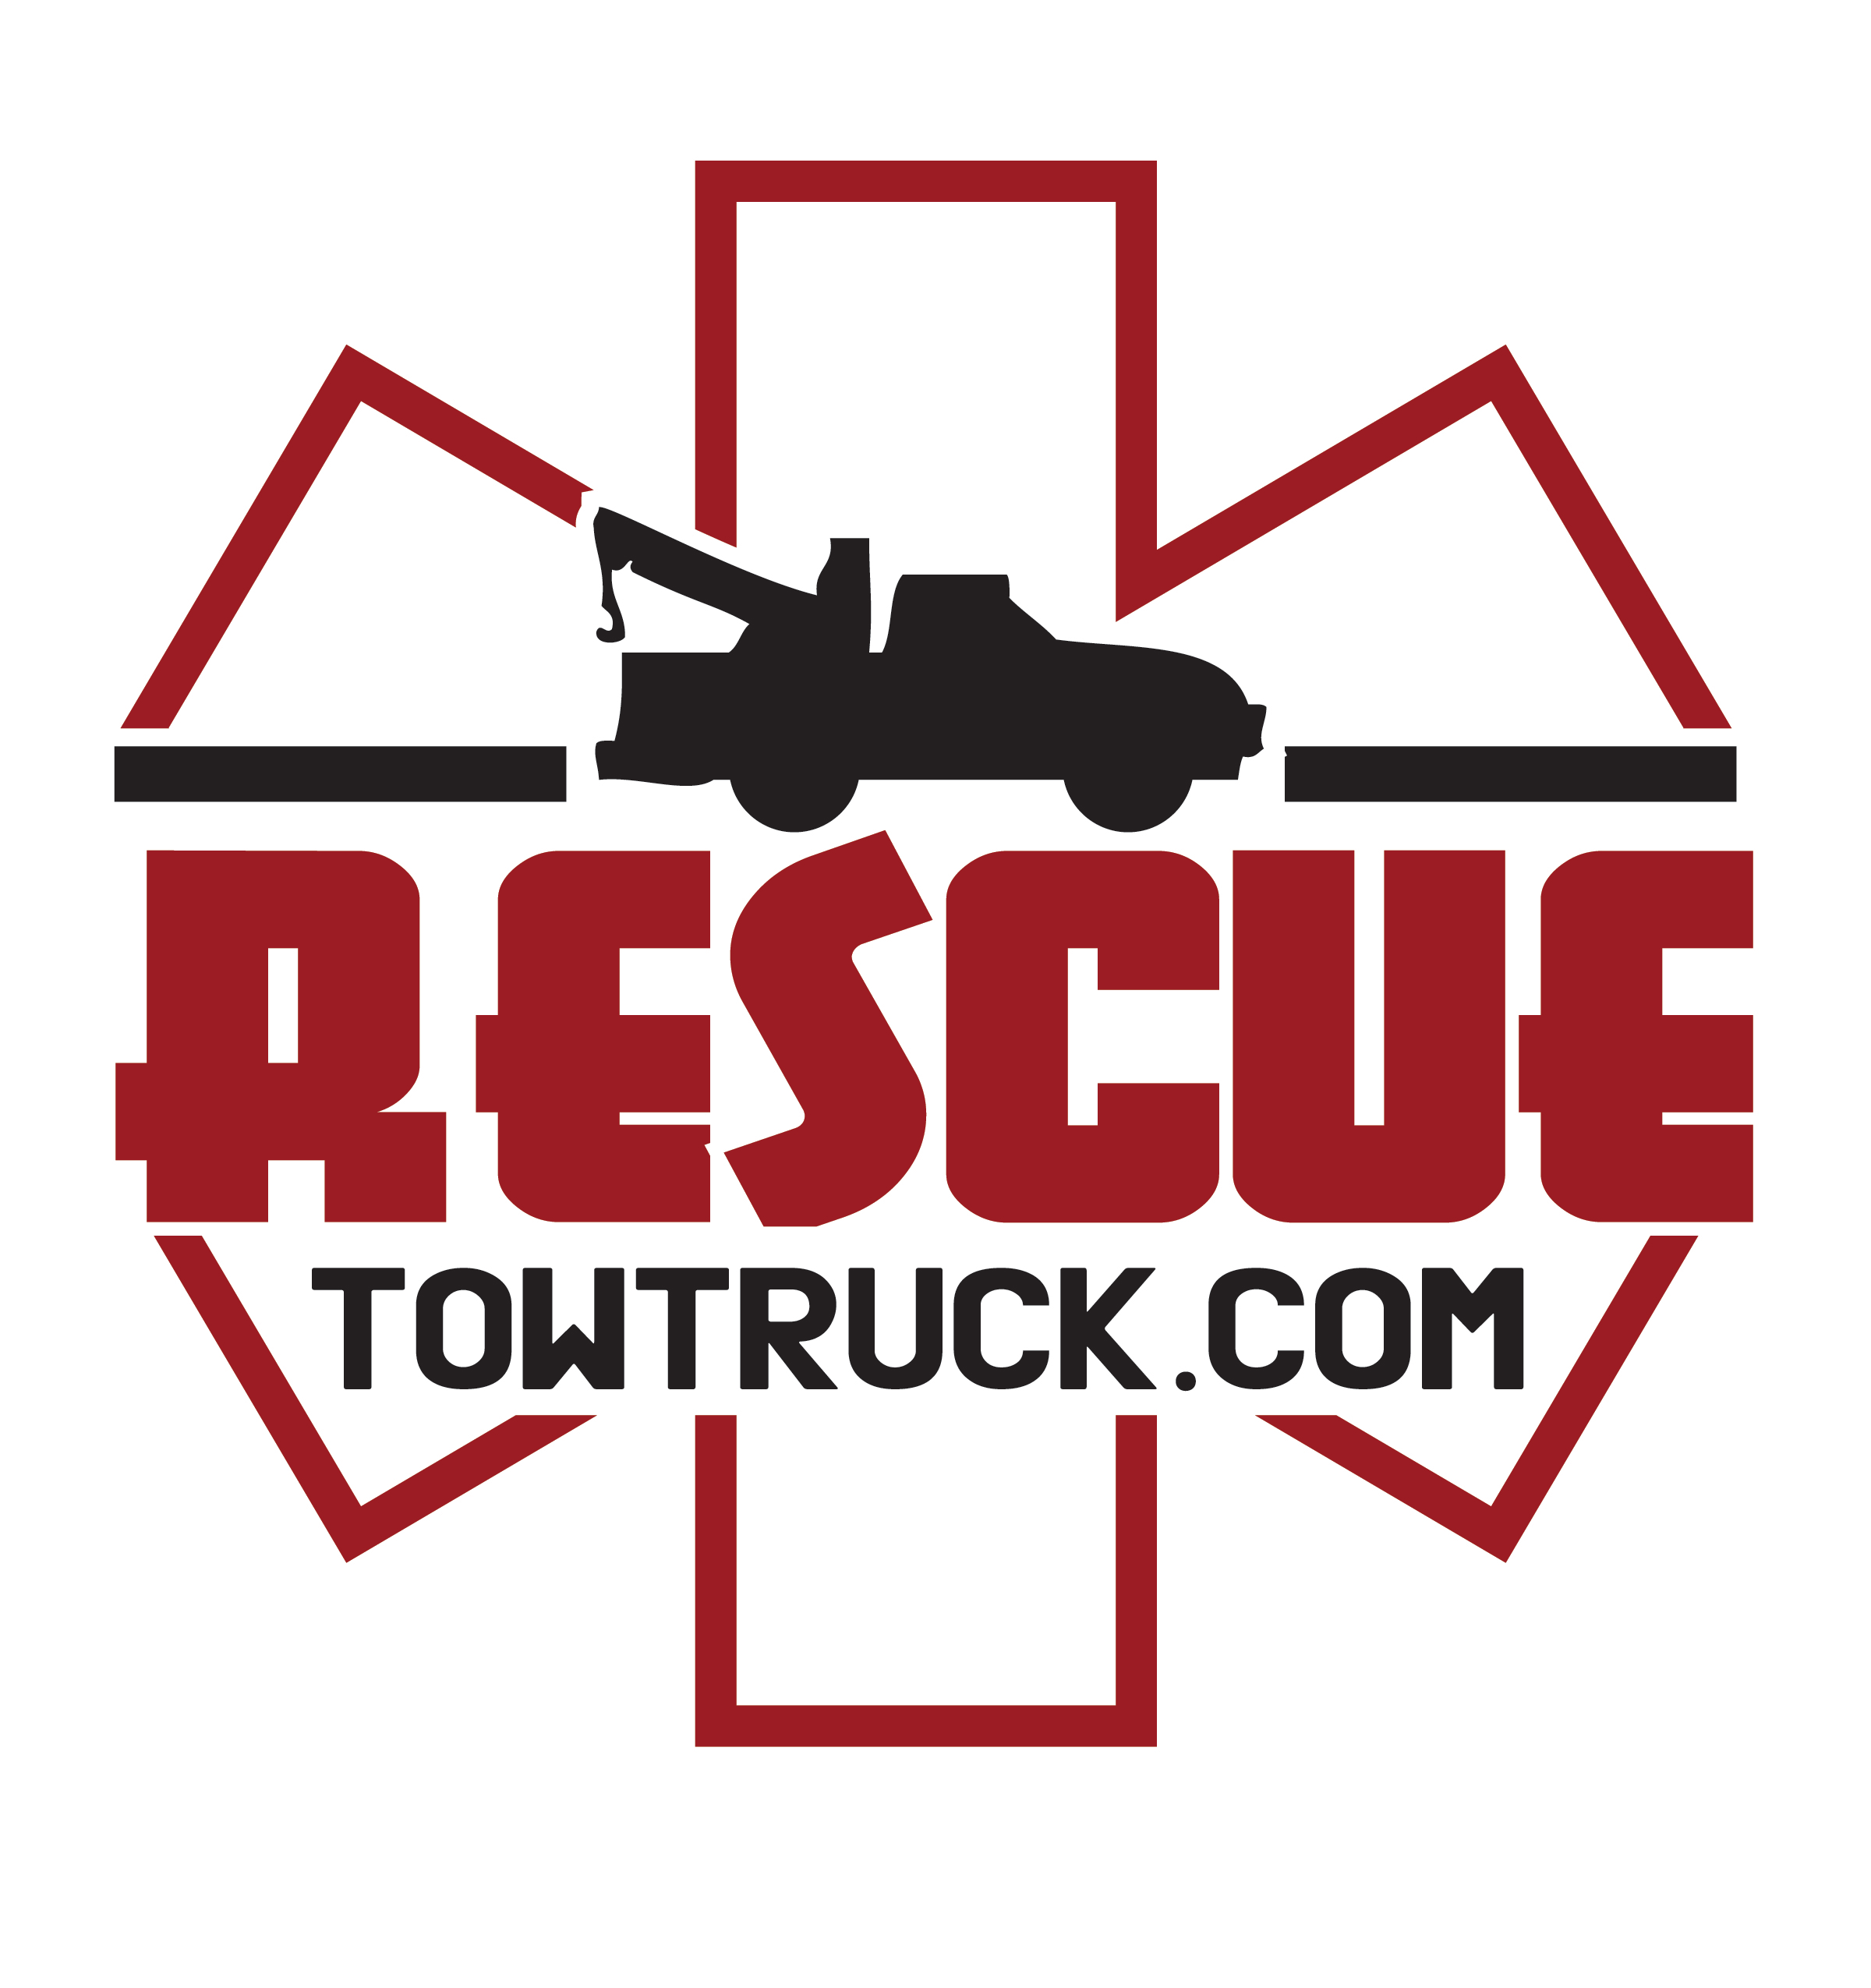 Rescue Tow Truck Logo